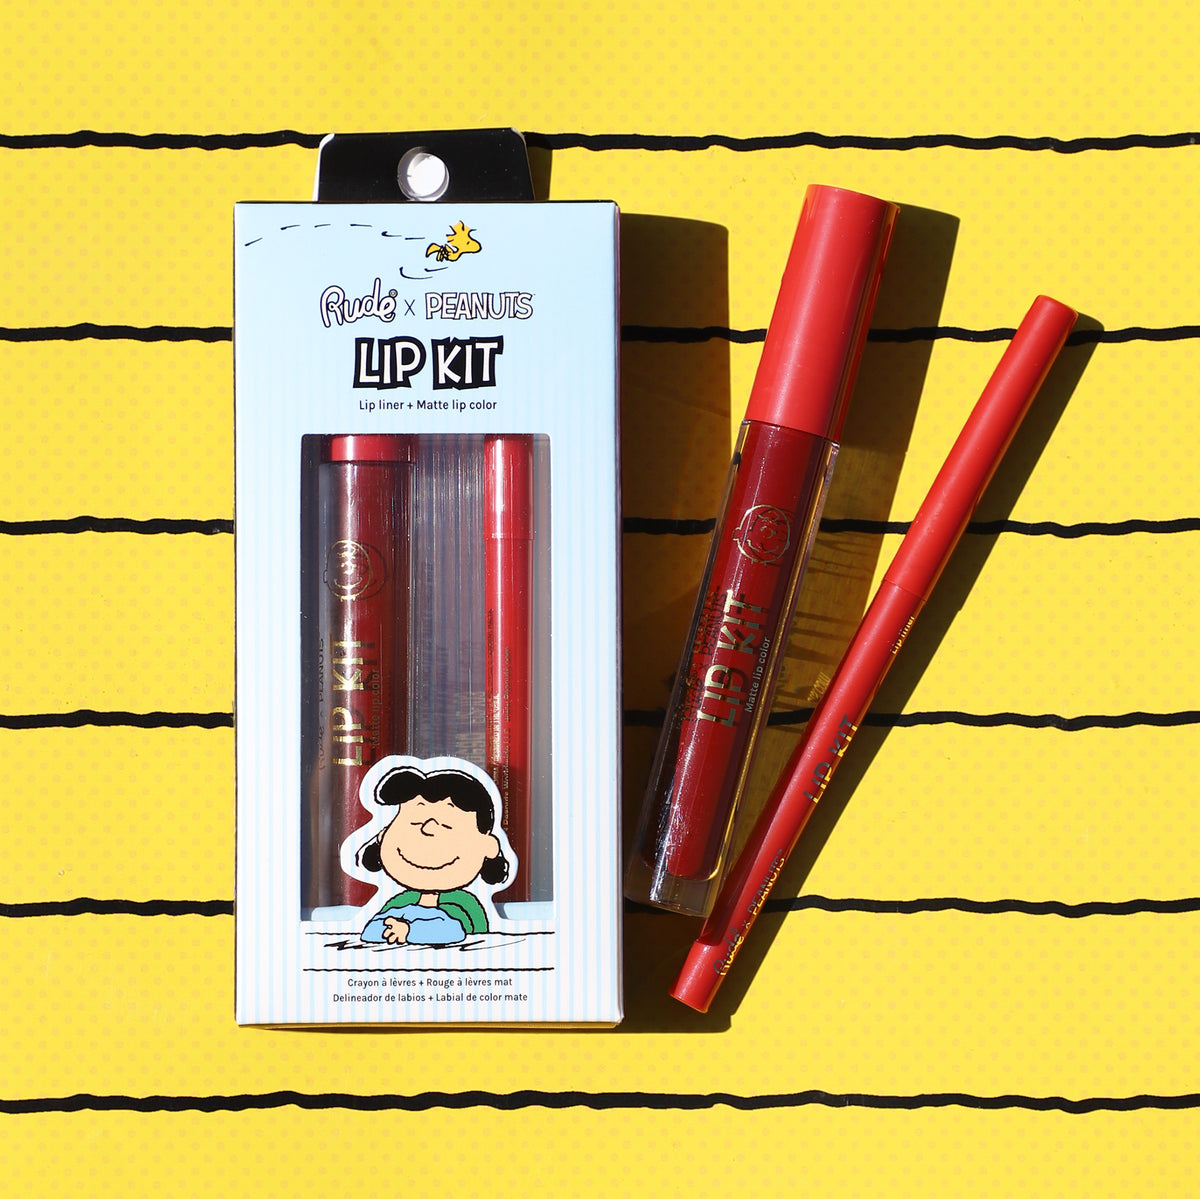 Peanuts Lip Kit - Lip Liner + Matte Lip Color